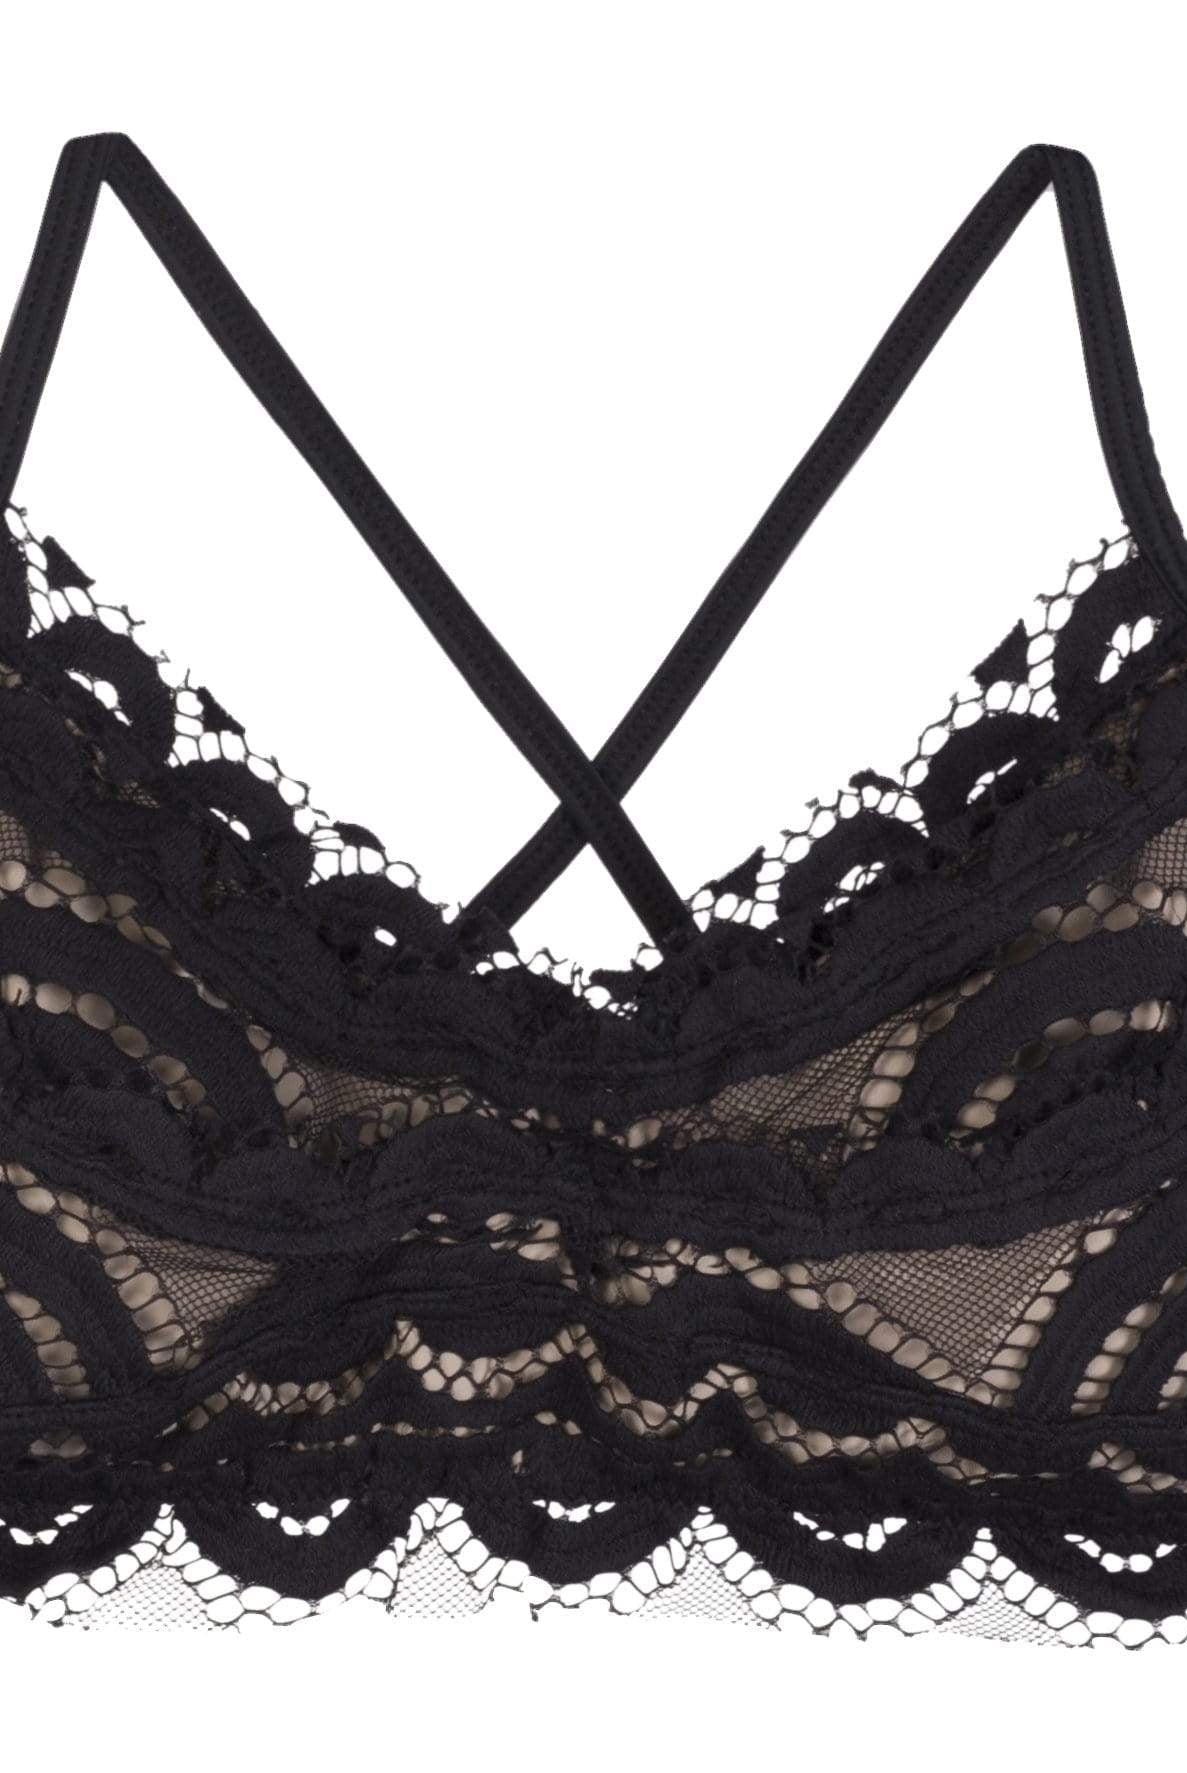 Black lace bralette bikini top in front of white background